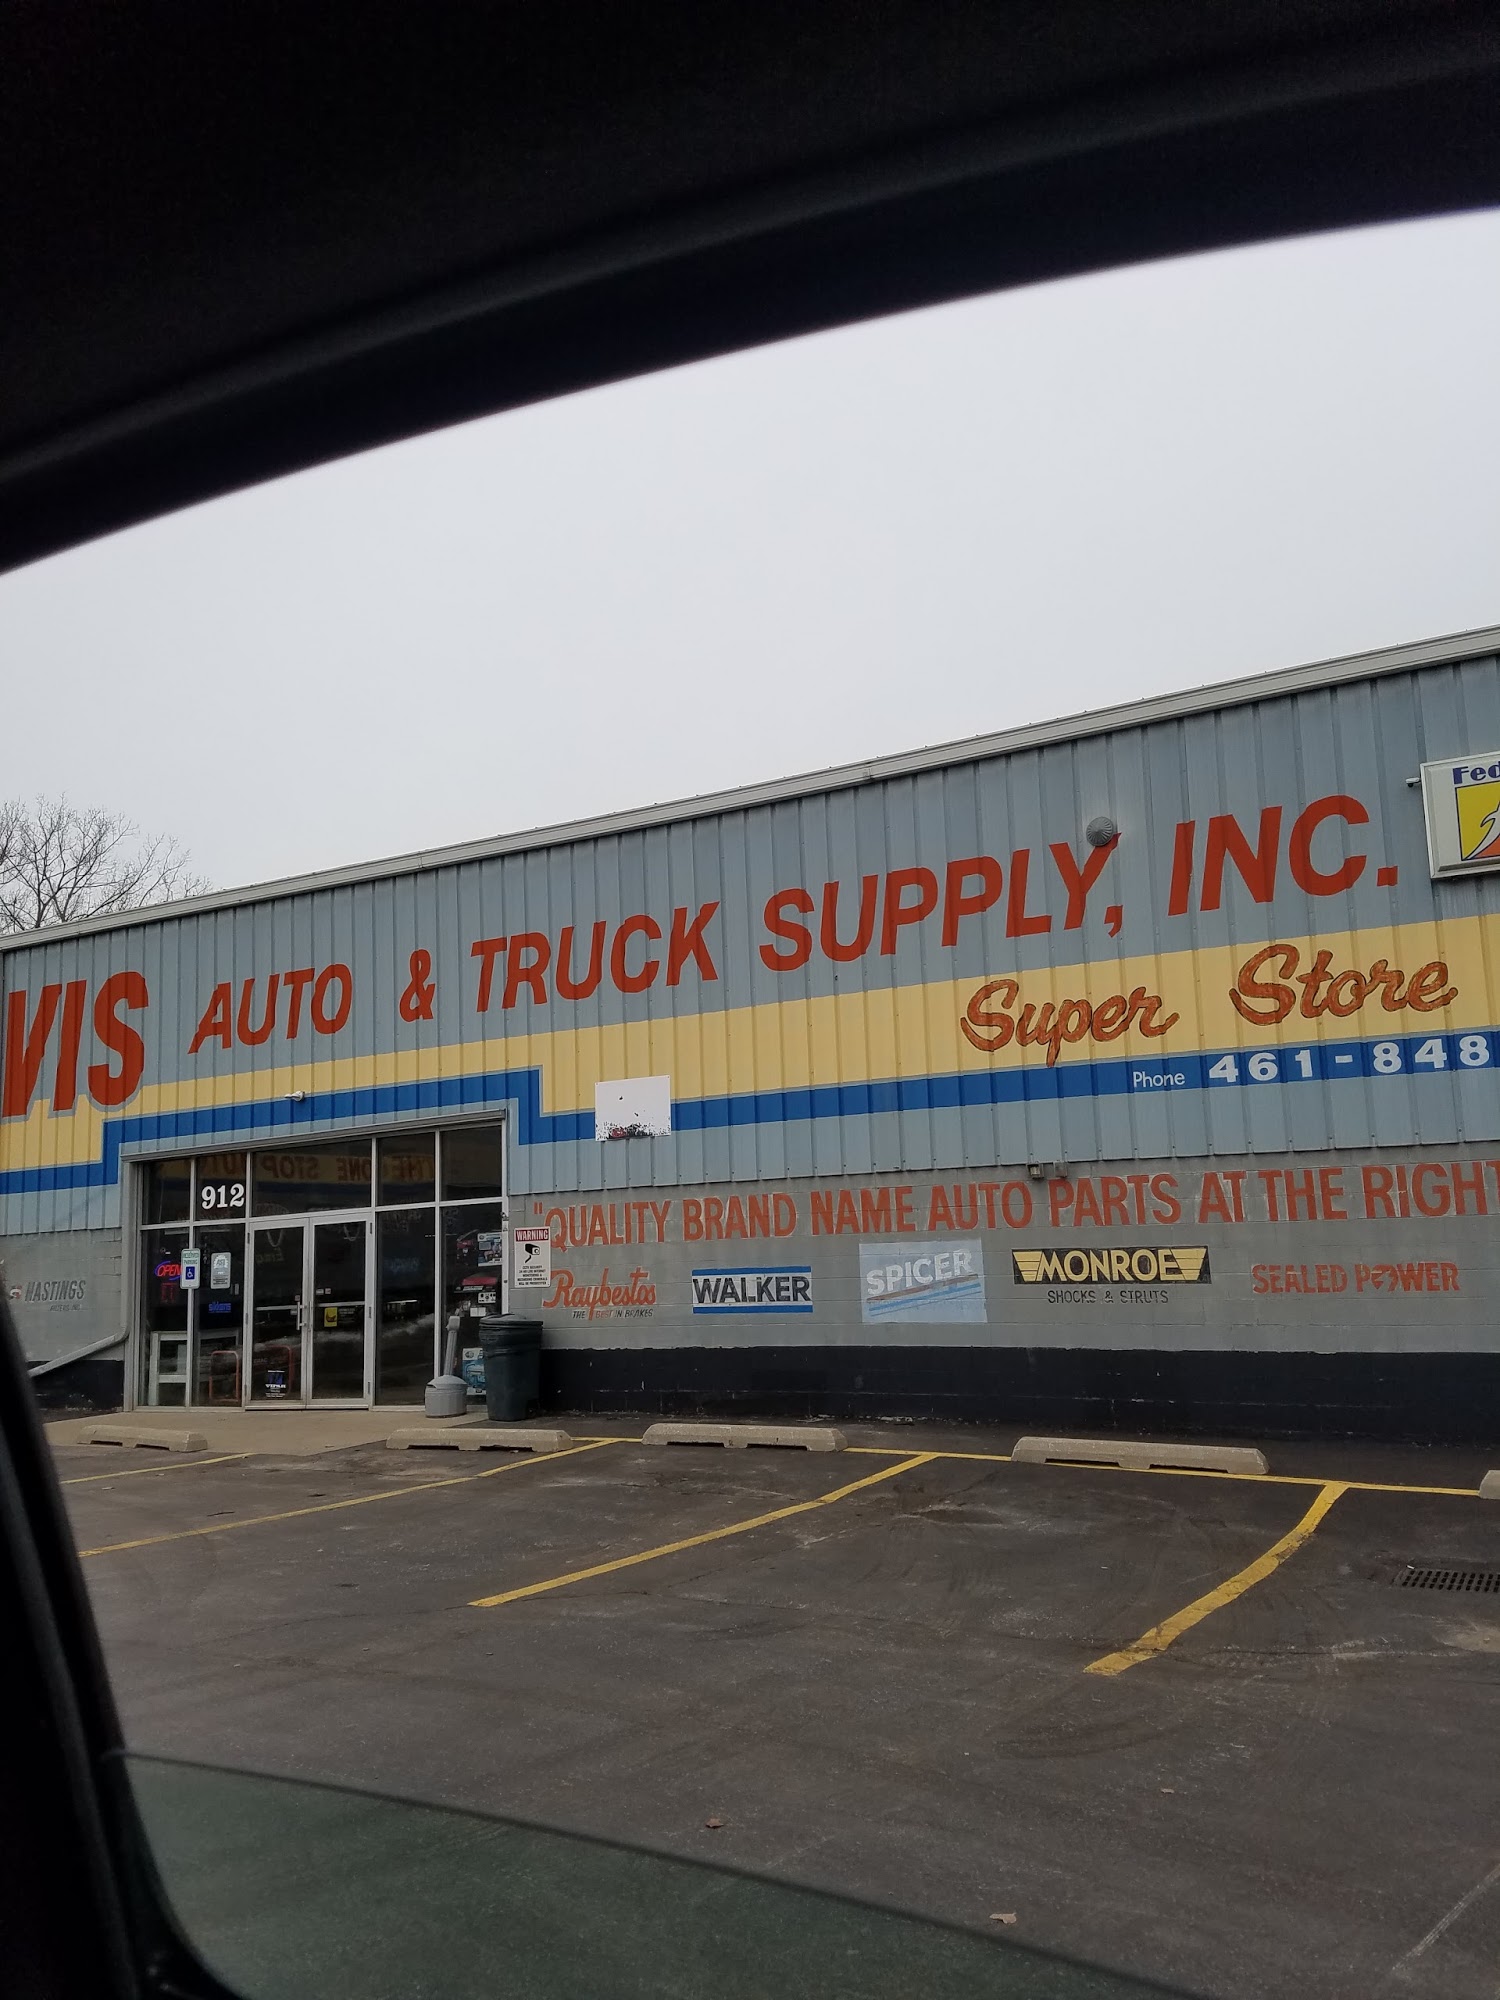 Hovis Auto & Truck Supply Inc